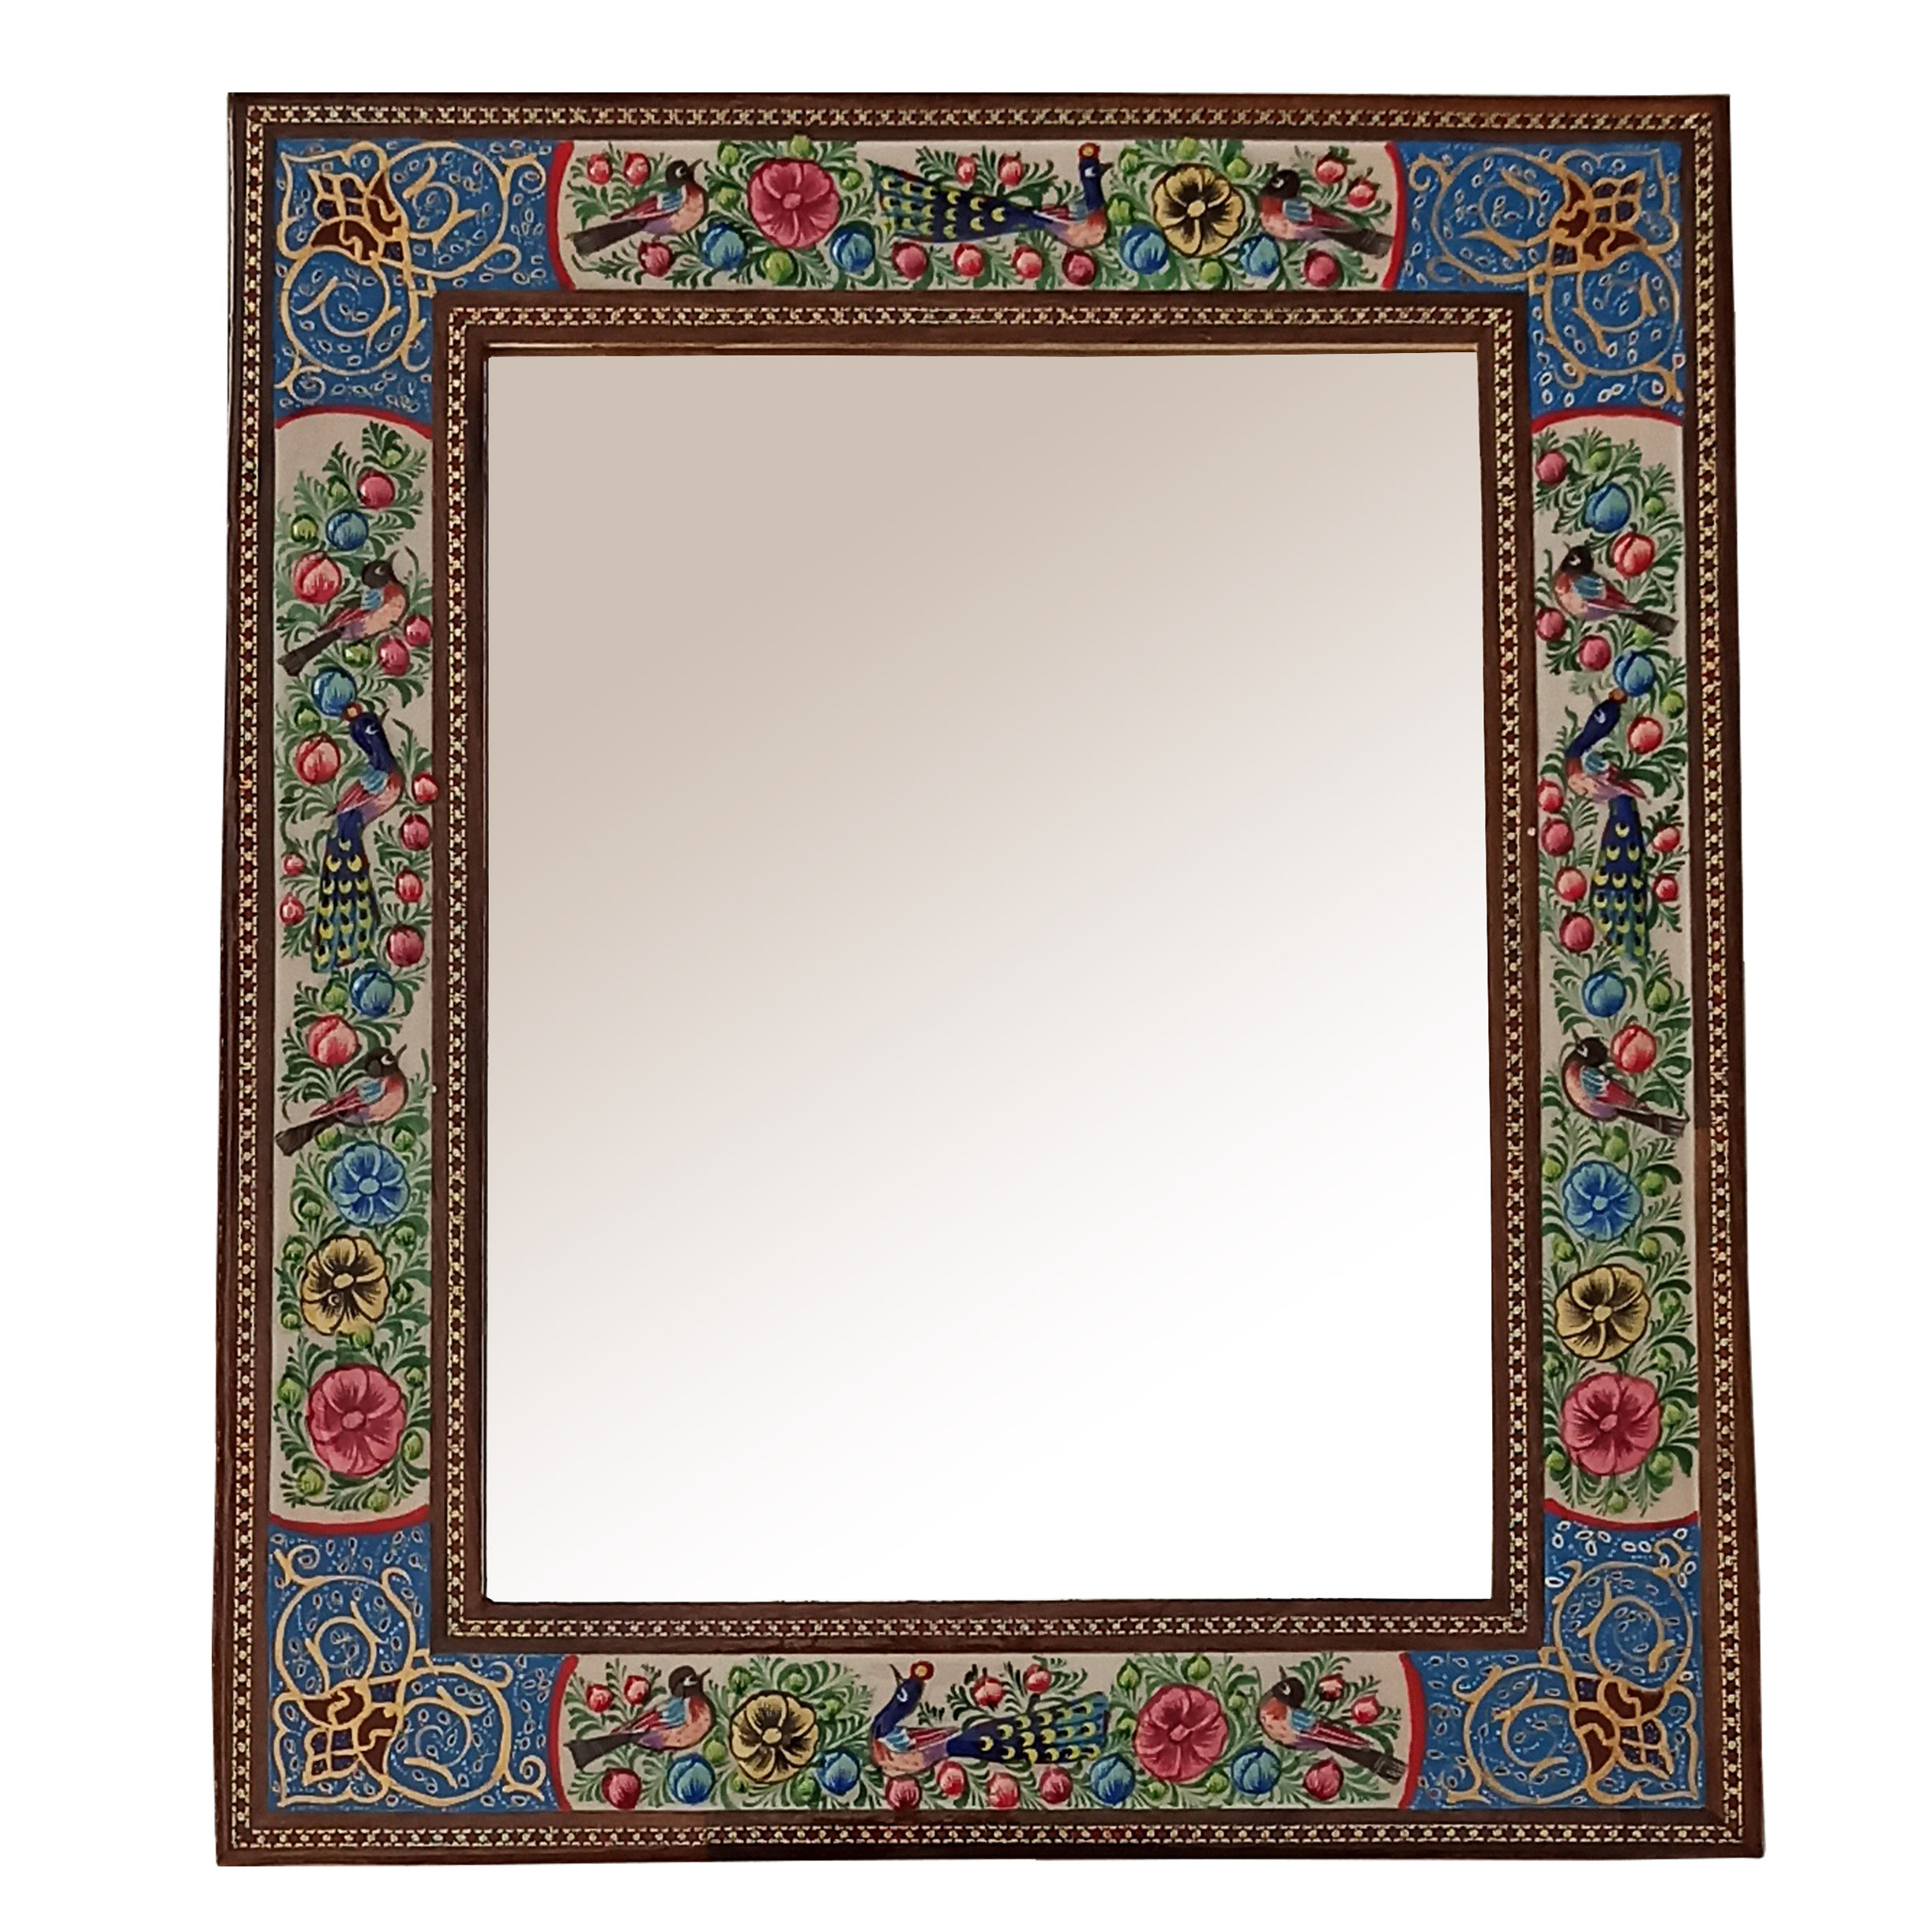 Inlay handicraft mirror frame, code 2330